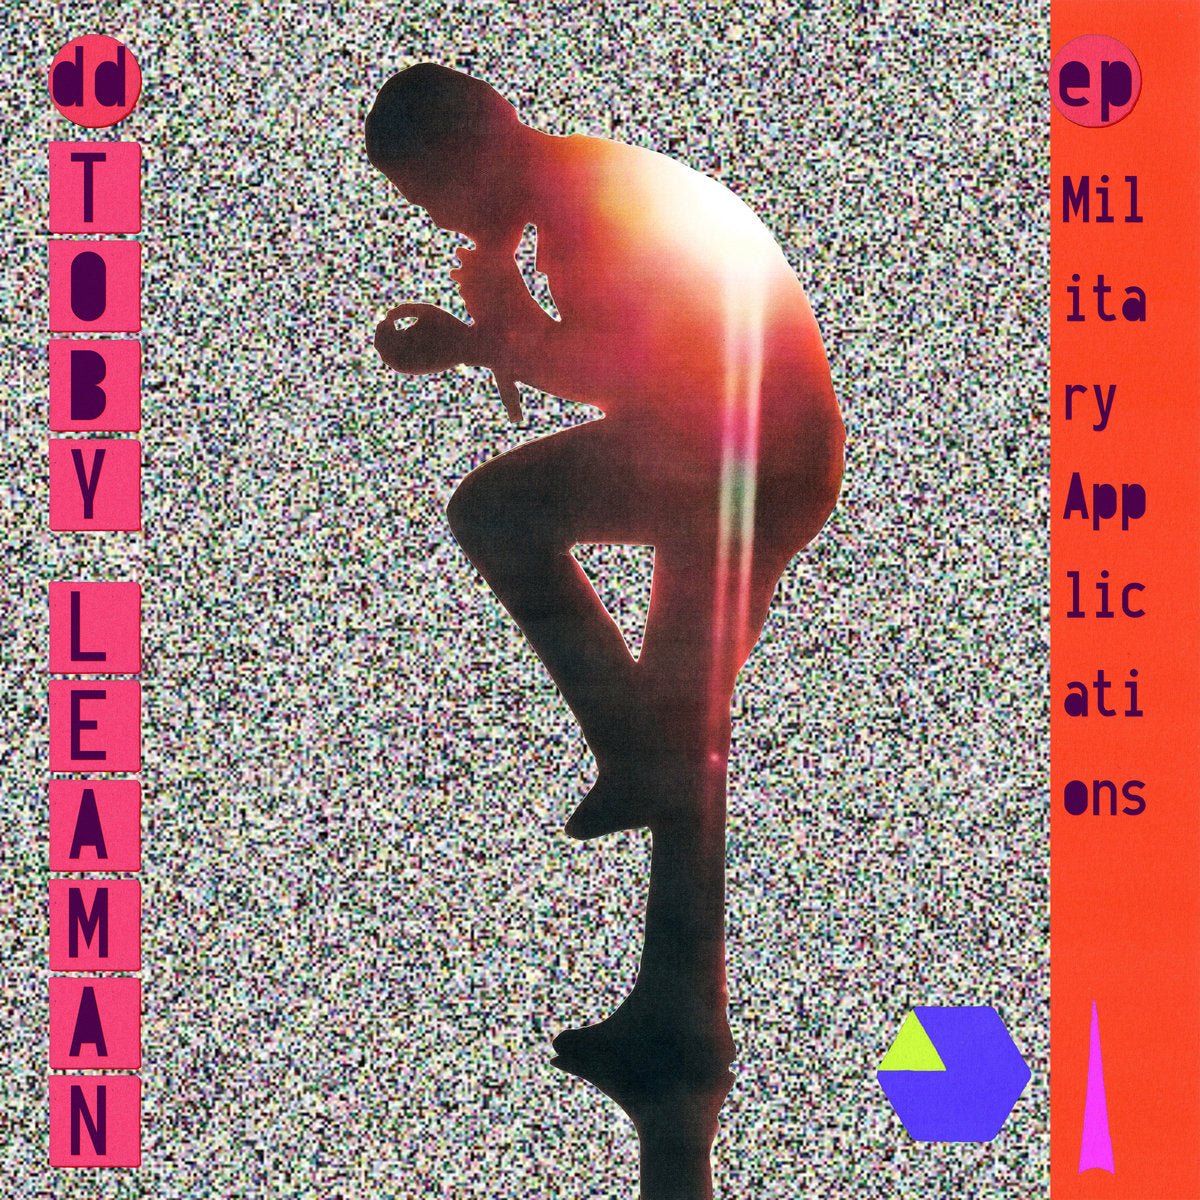 dd Toby Leaman - Military Applications [New Vinyl] - Tonality Records